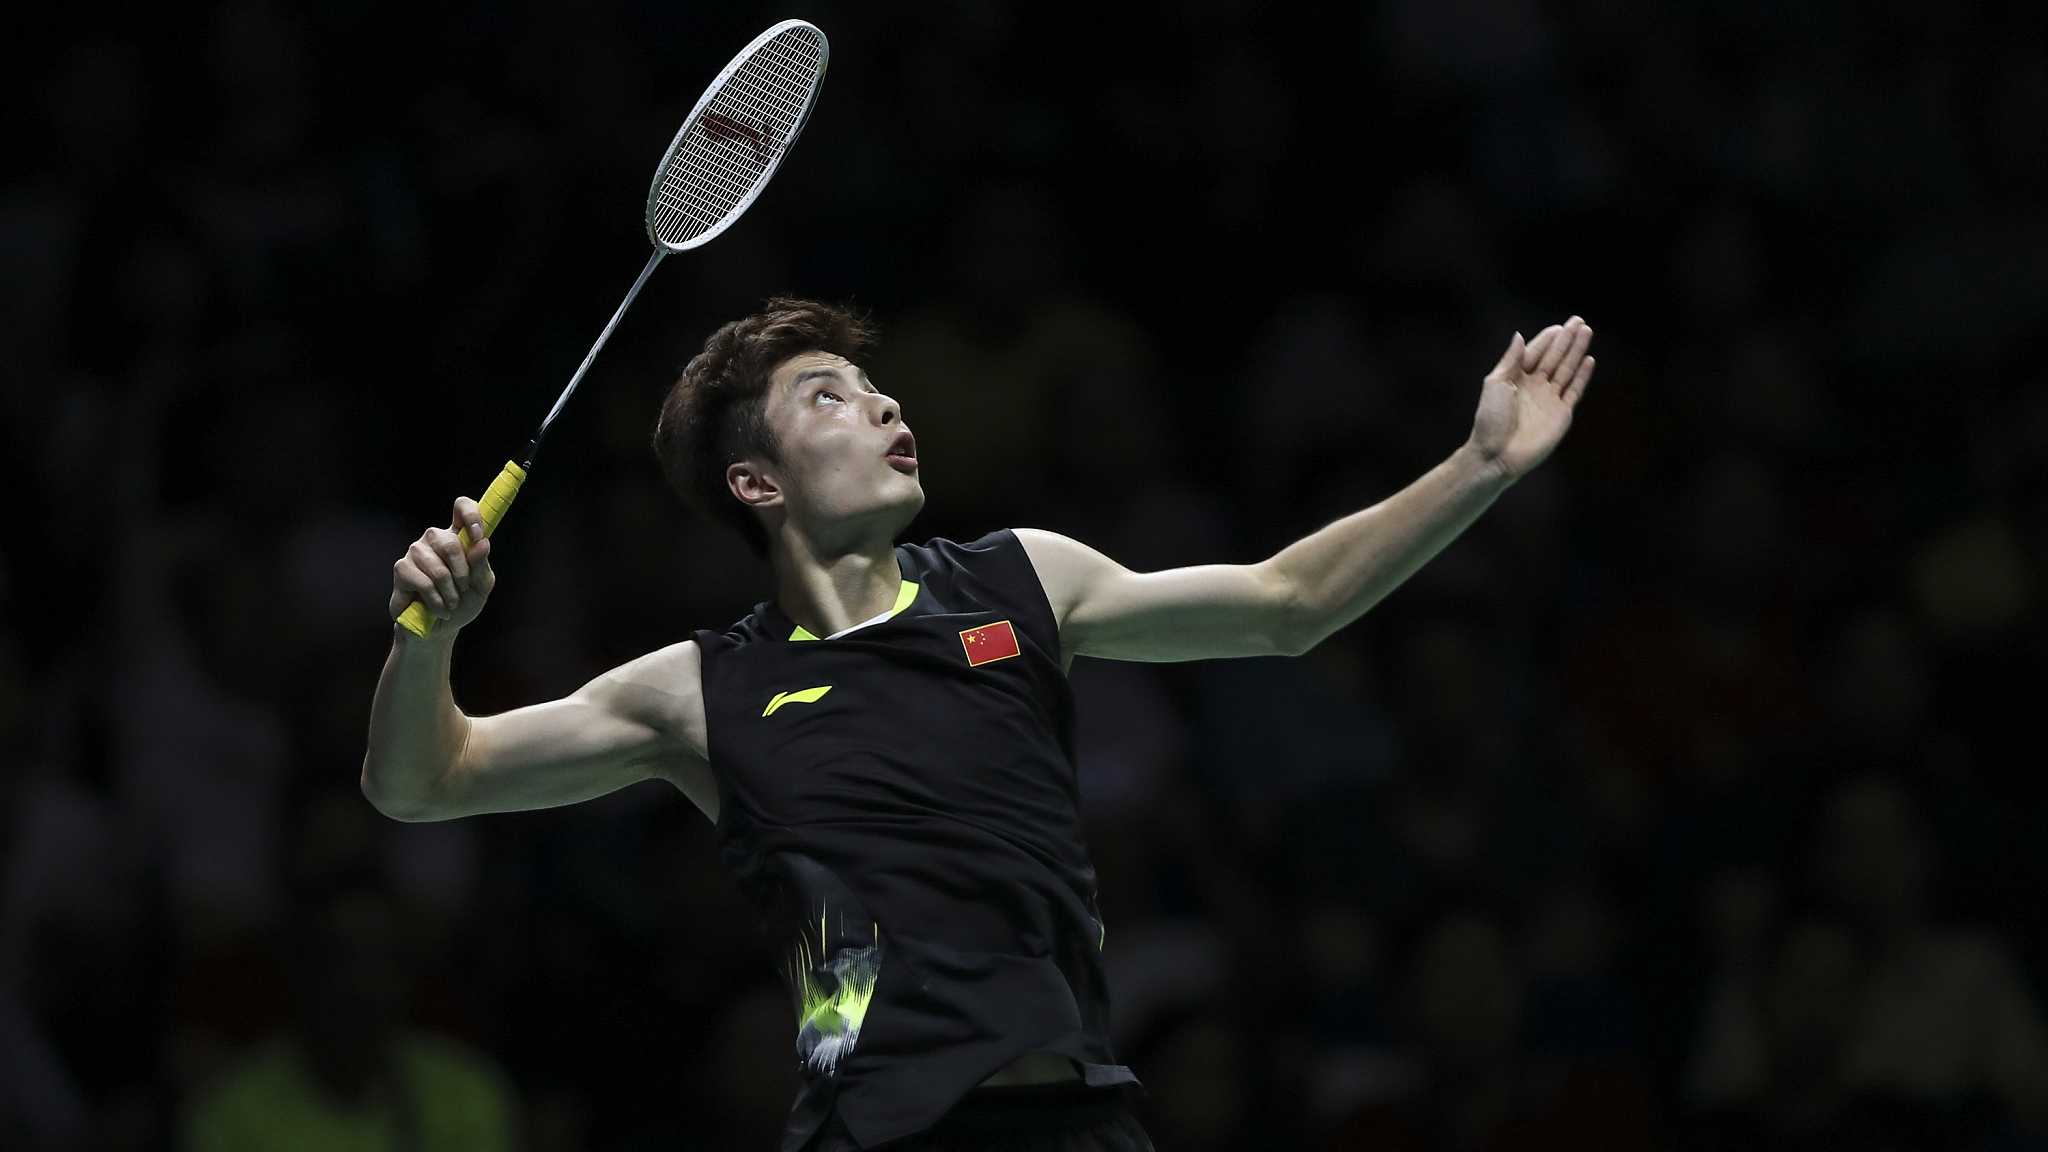 Shi Yu Qi Badminton – A Player Study